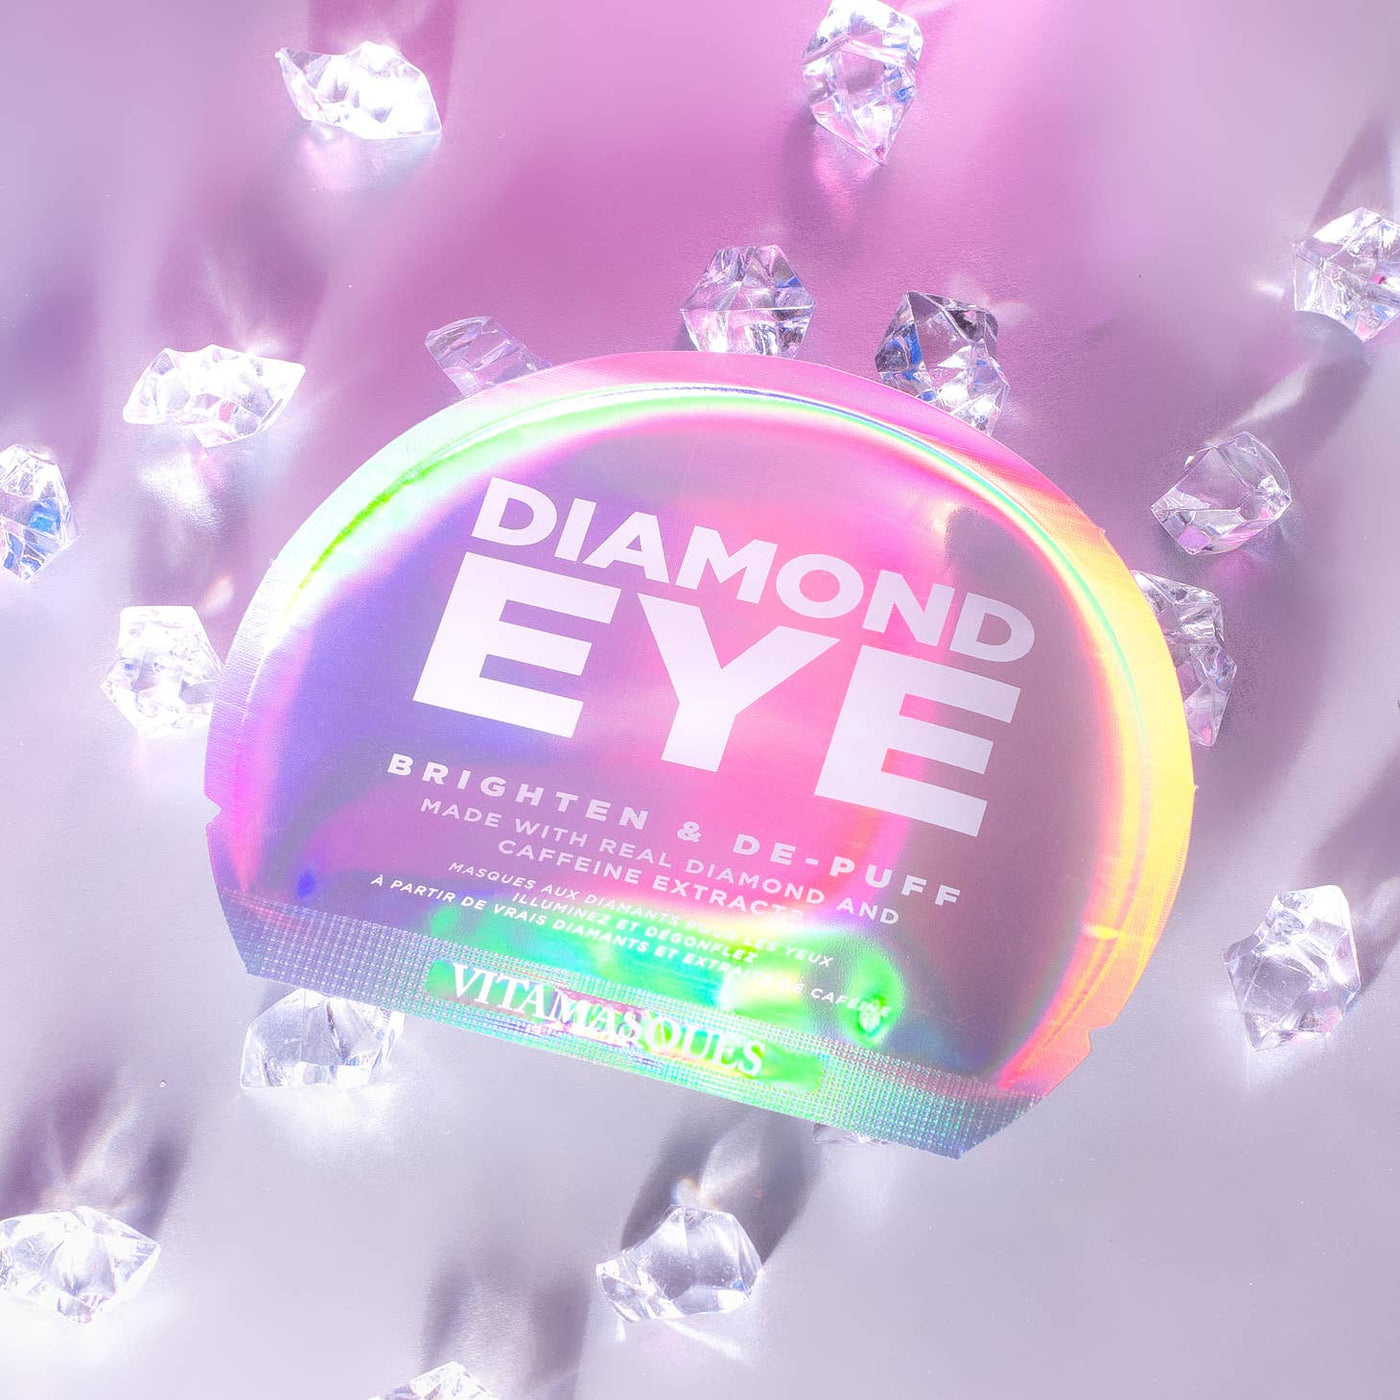 Diamond Eye Pads by Vitamasques